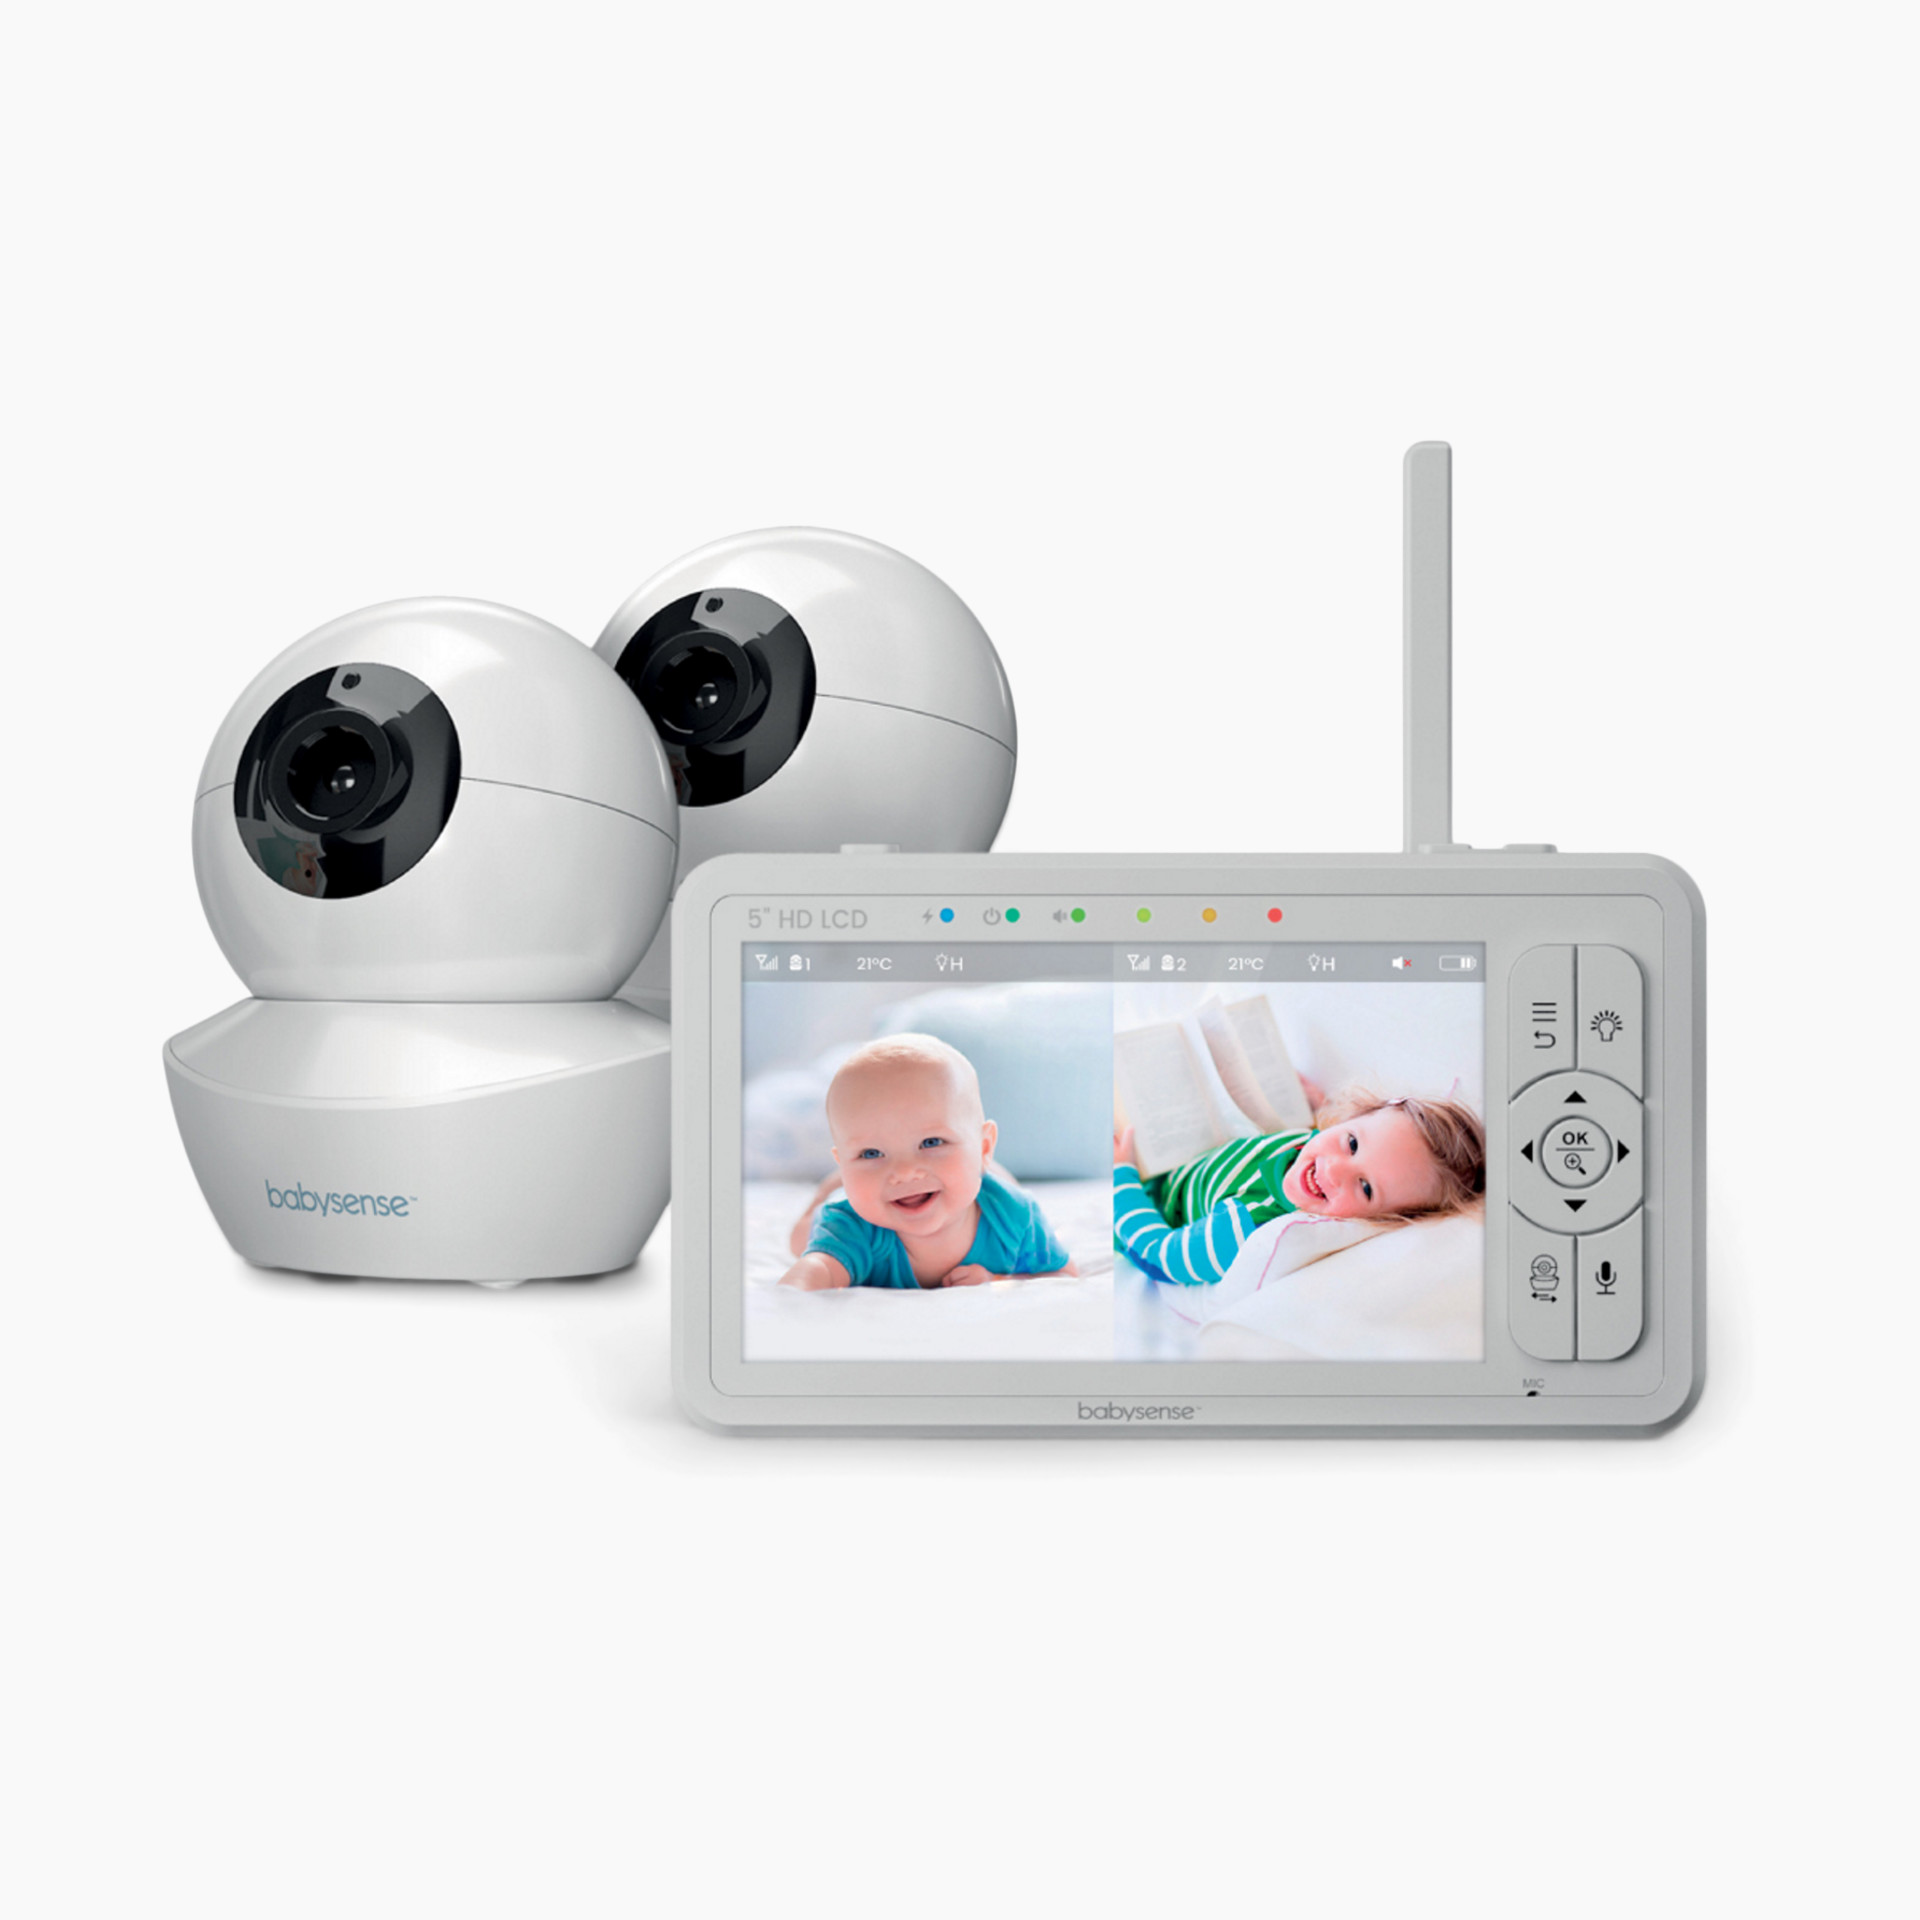 Babysense See 1080p HD WiFi Baby Monitor Camera with Pan, Tilt